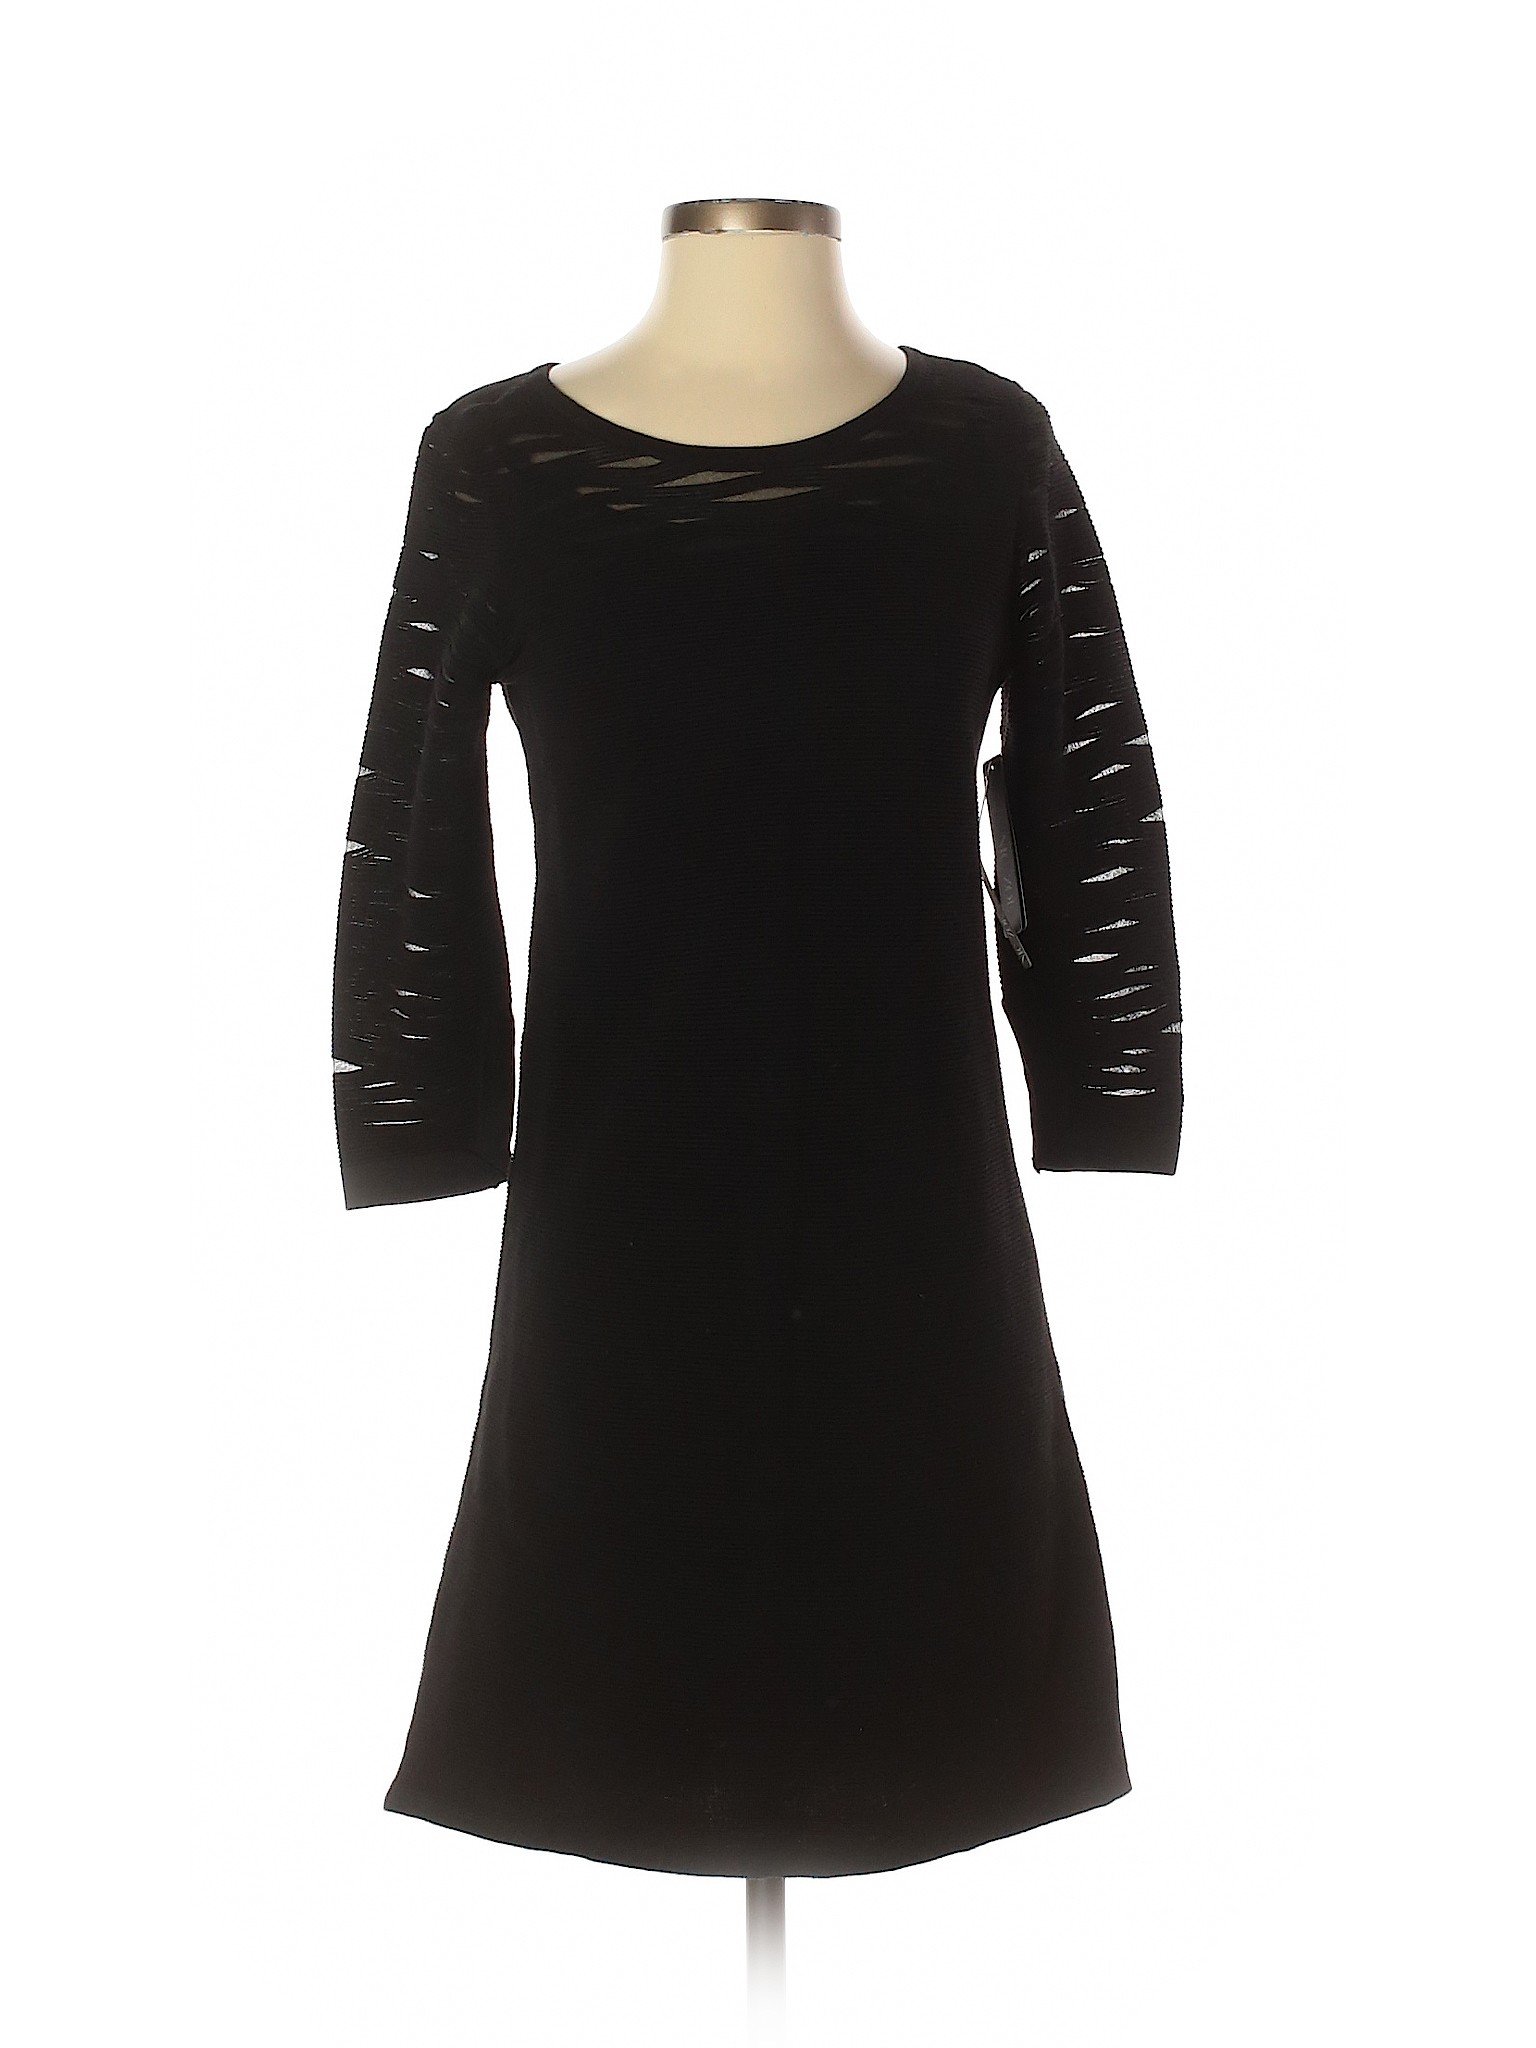 NWT Nic + Zoe Women Black Casual Dress P Petites | eBay